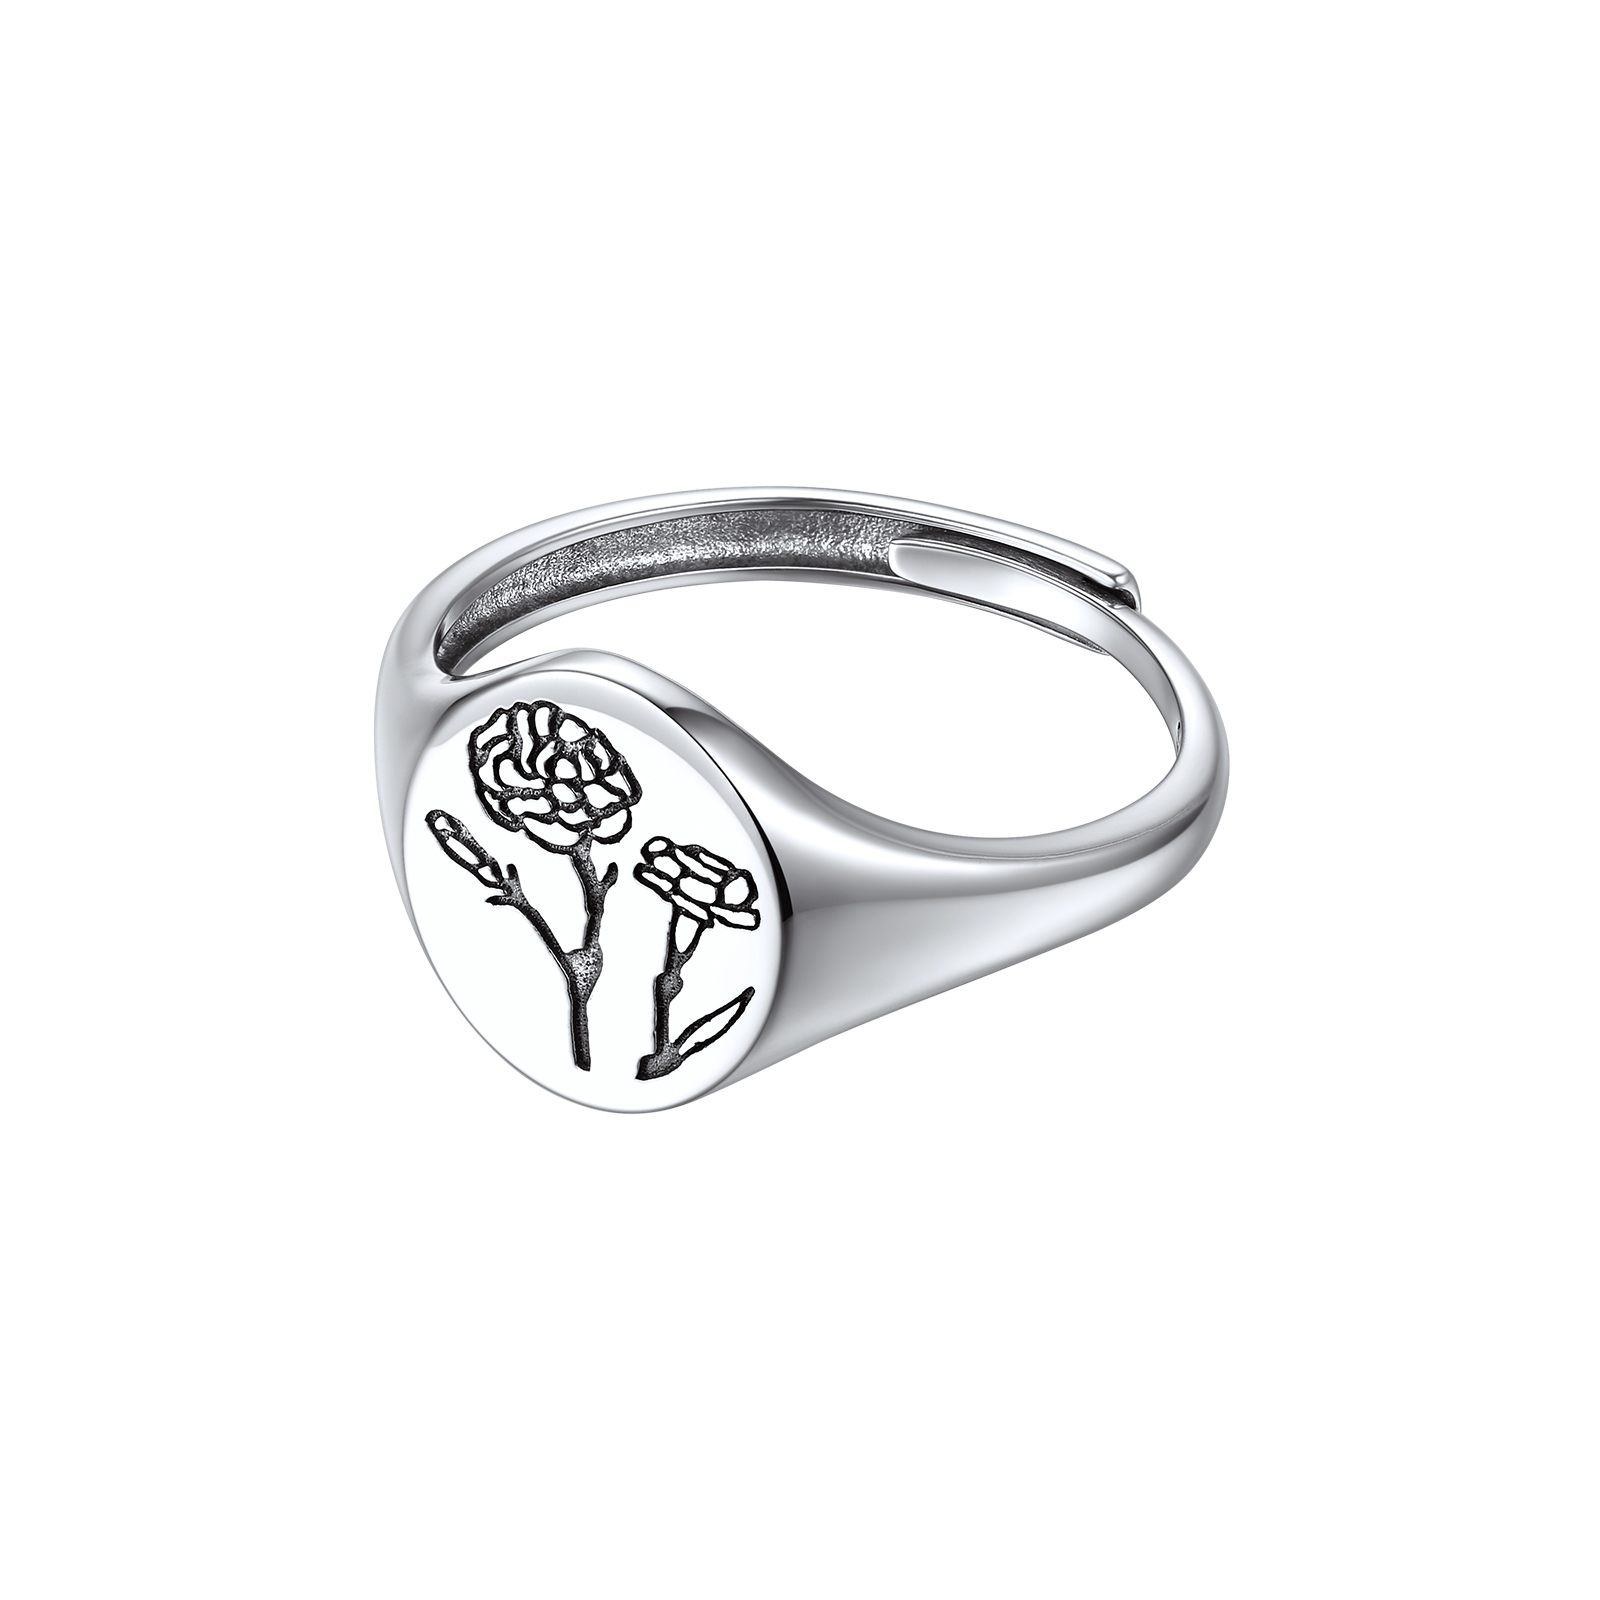 ChicSilver Silver Birth Flower Signet Ring For Women